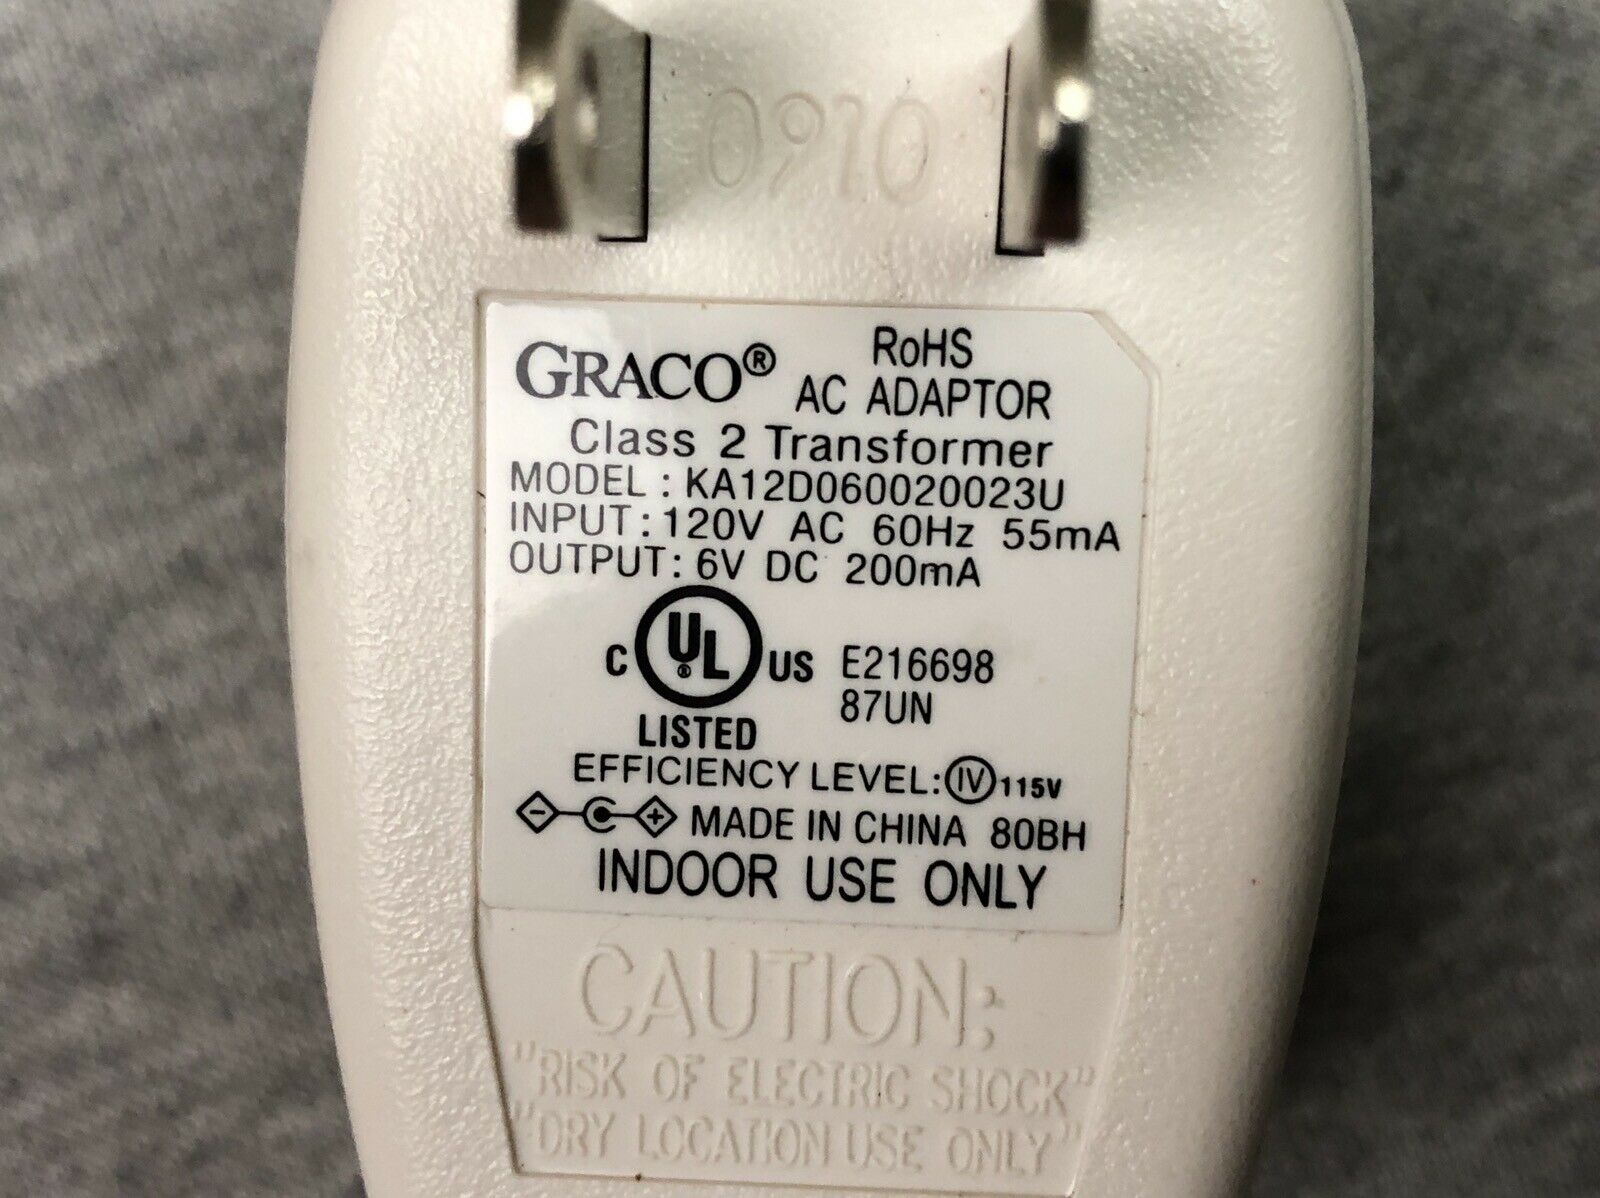 Graco KA12D060020023U AC Adapter Output DC 6V 55mA Brand: Graco Type: AC/DC Adapter UPC: Does not apply Output: DC